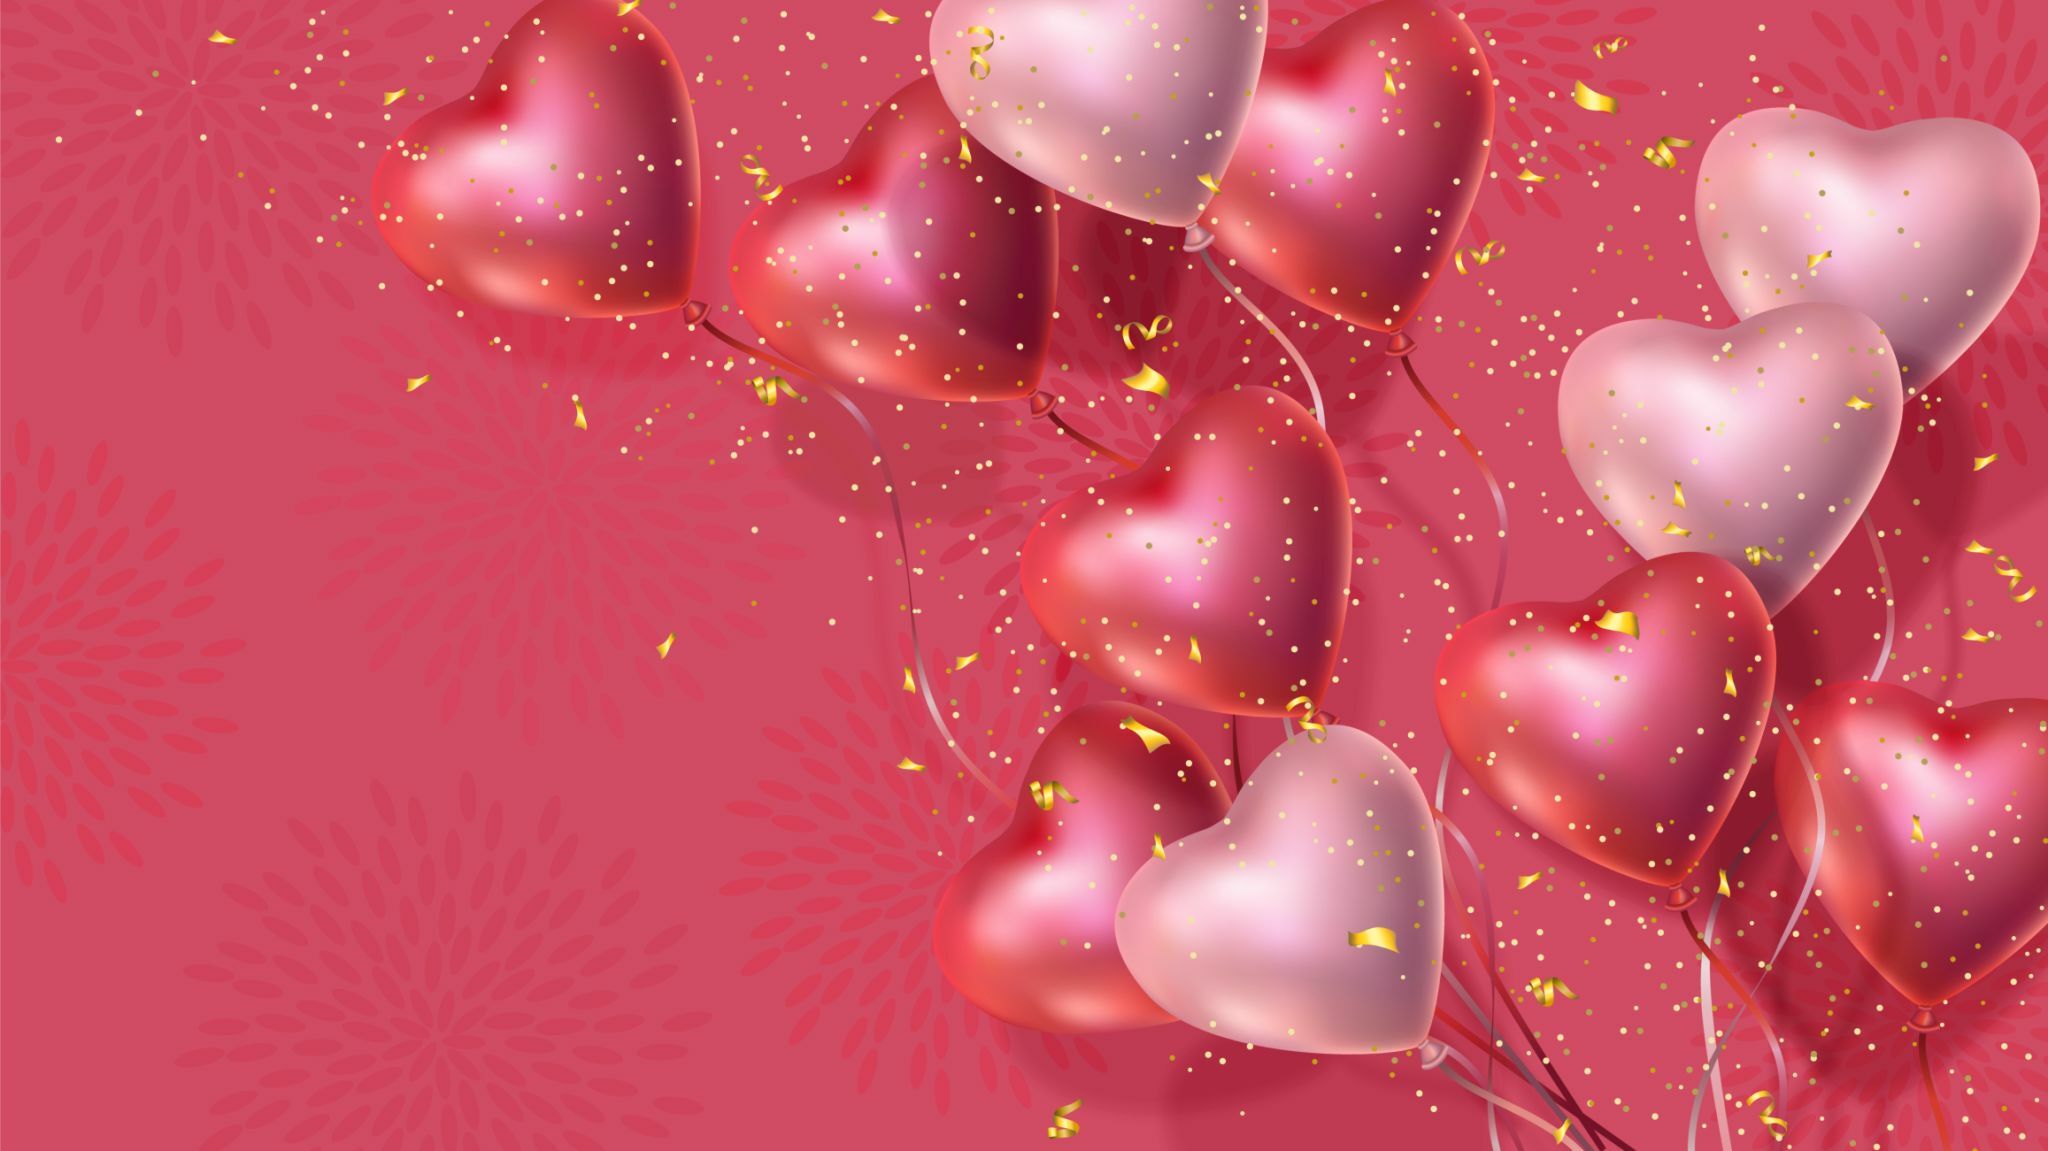 Romantic Balloons Birthday Gift Ideas for Wife in Dubai